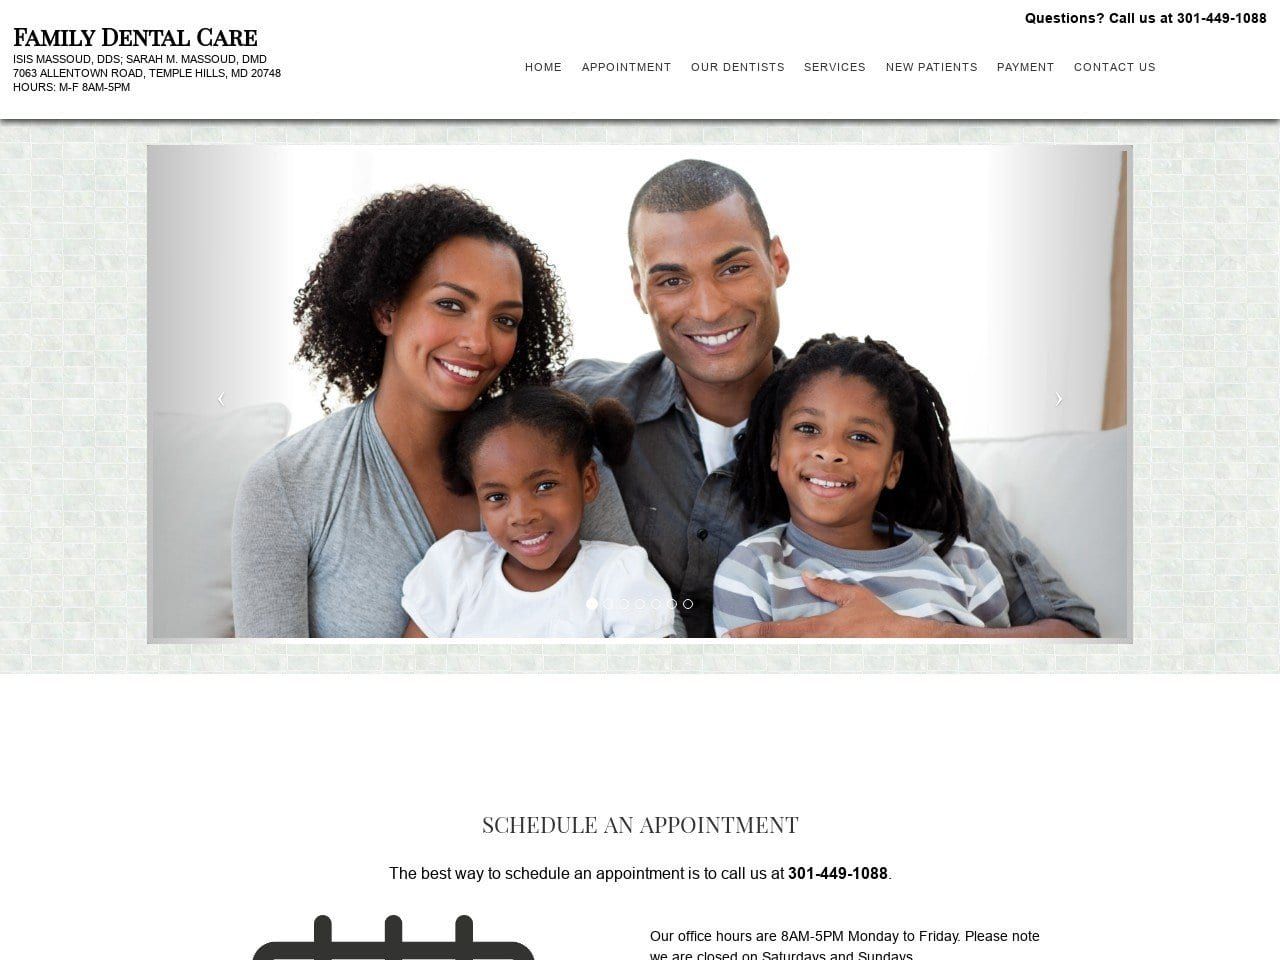 Family Dental Care Website Screenshot from mdfamilydental.com